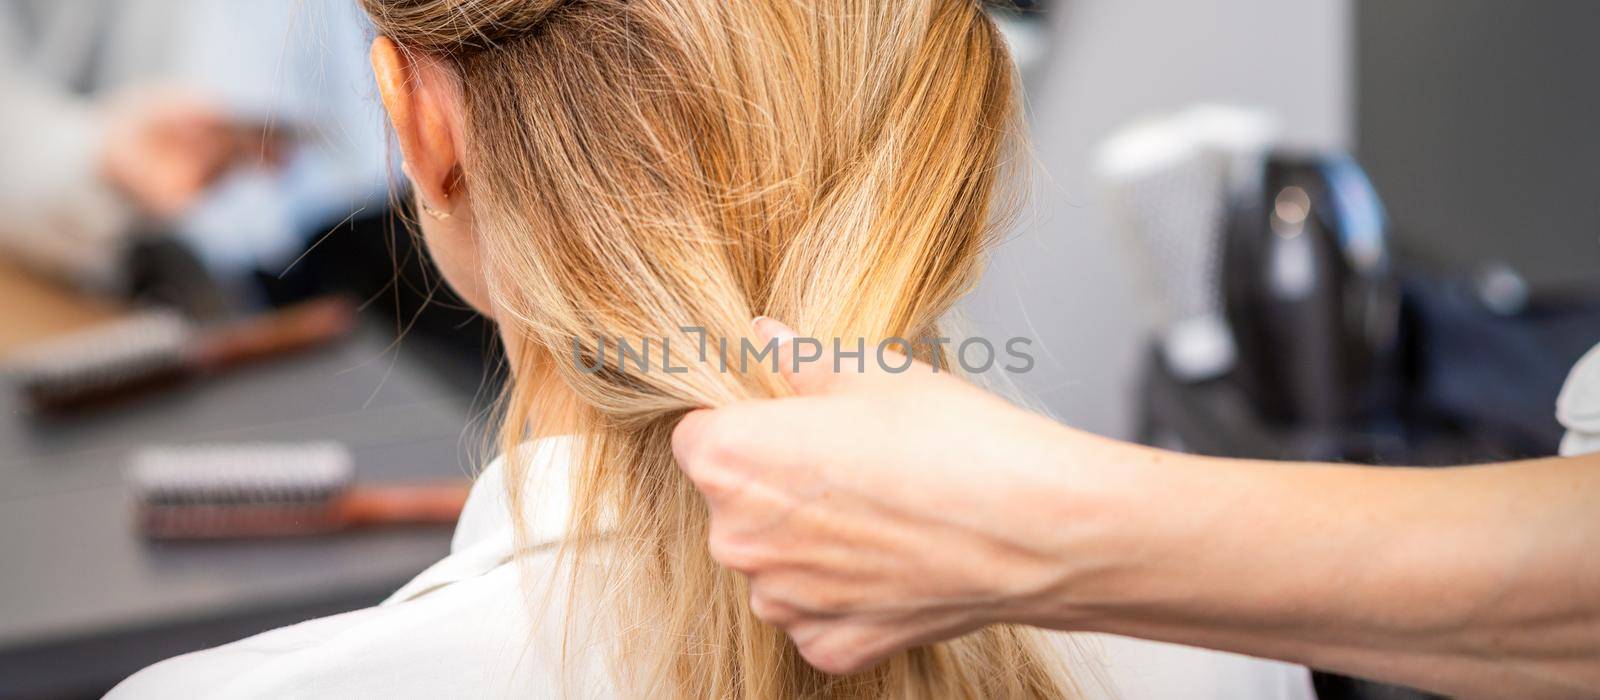 Hairdresser styling hair of woman by okskukuruza